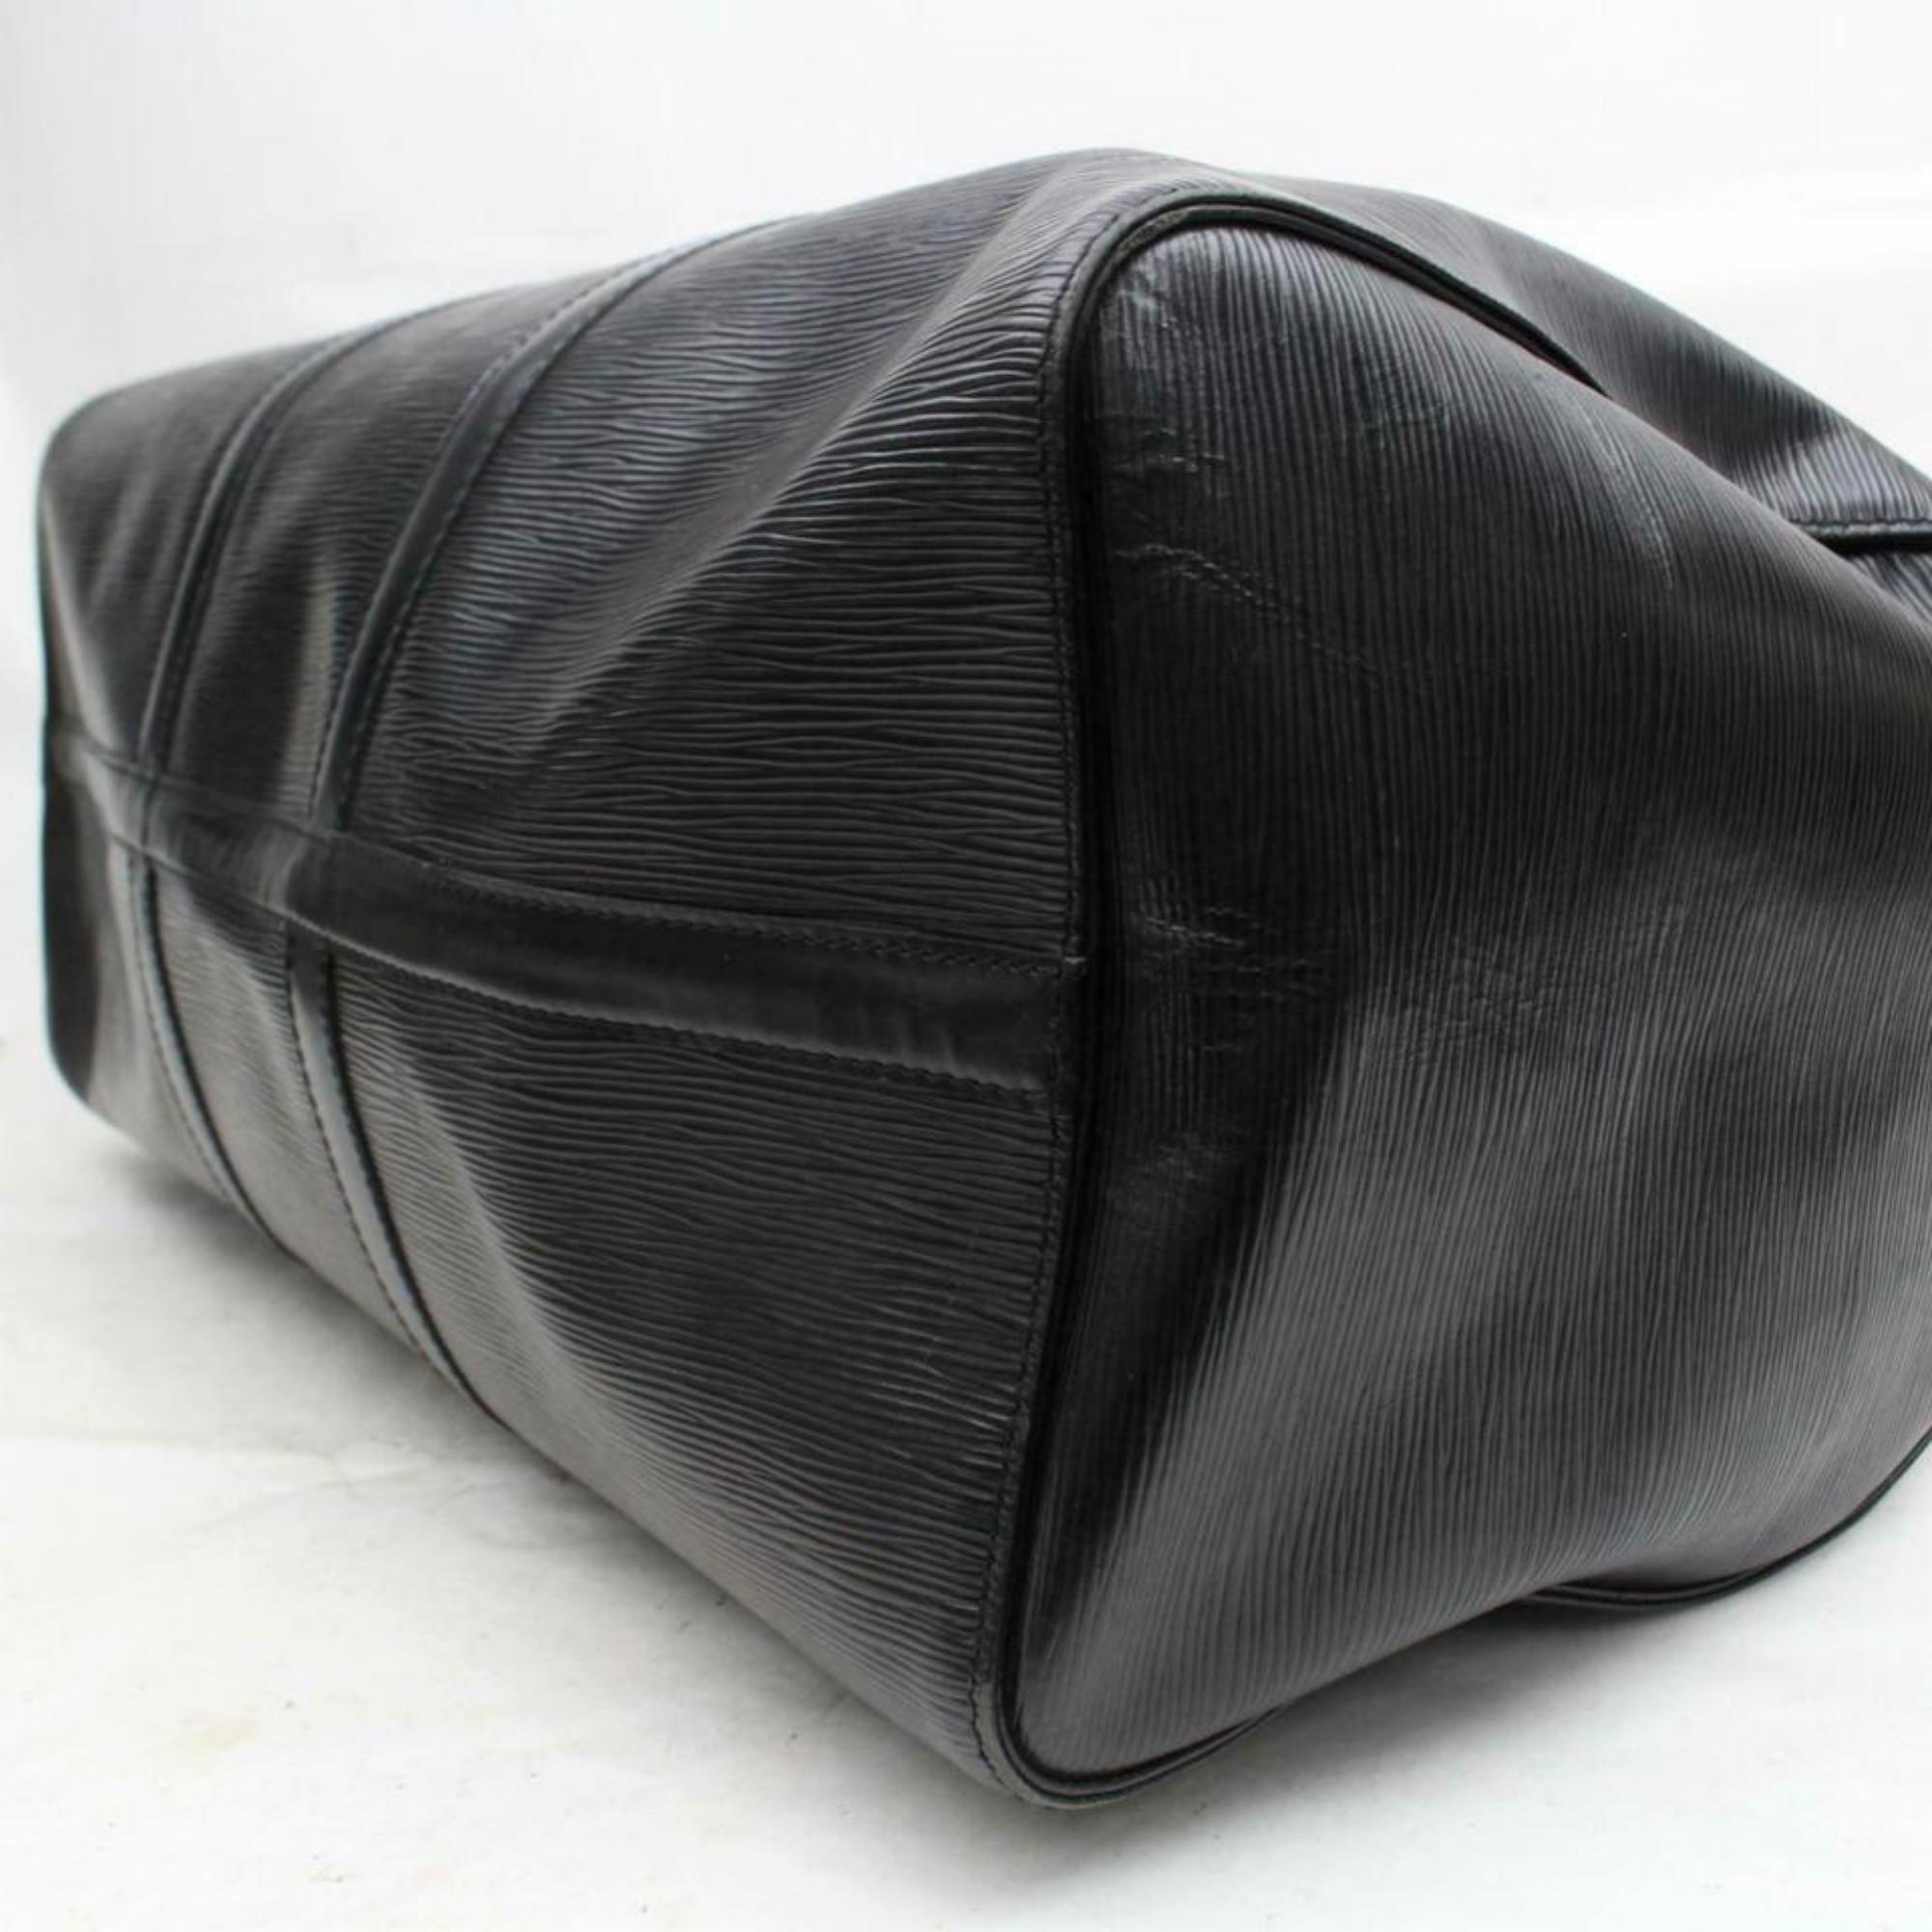 Louis Vuitton Keepall Duffle Noir 50 Mm 870239 Black Leather Weekend/Travel Bag For Sale 4